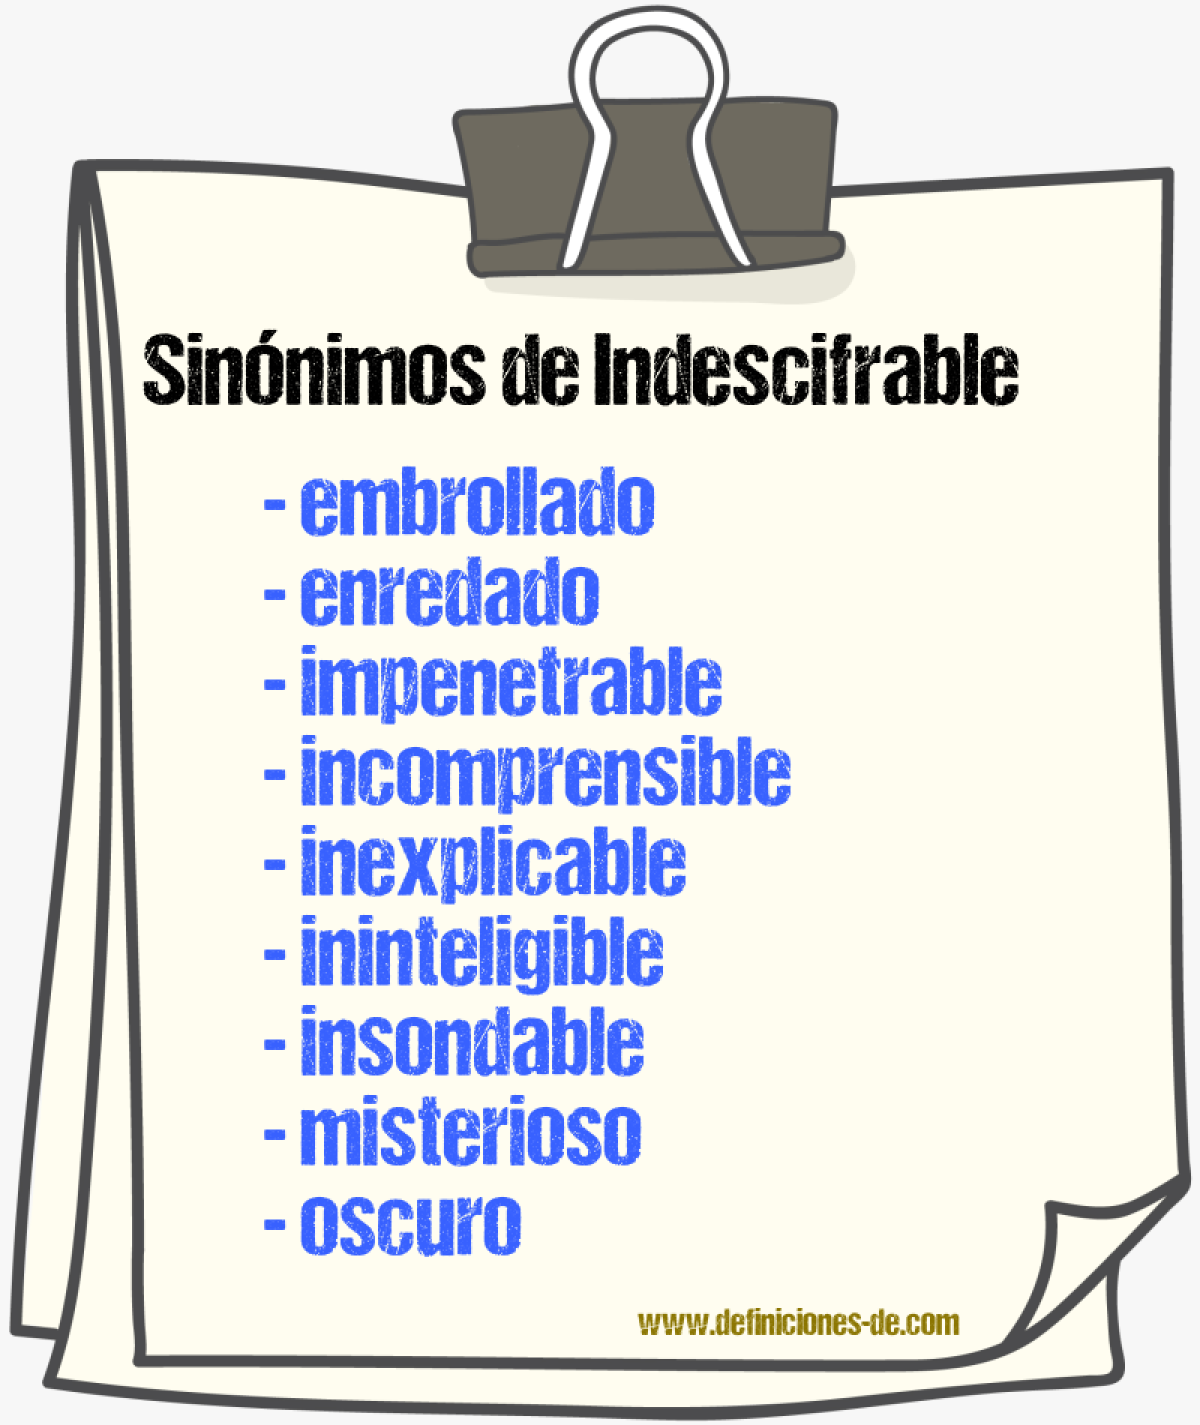 Sinónimos de indescifrable